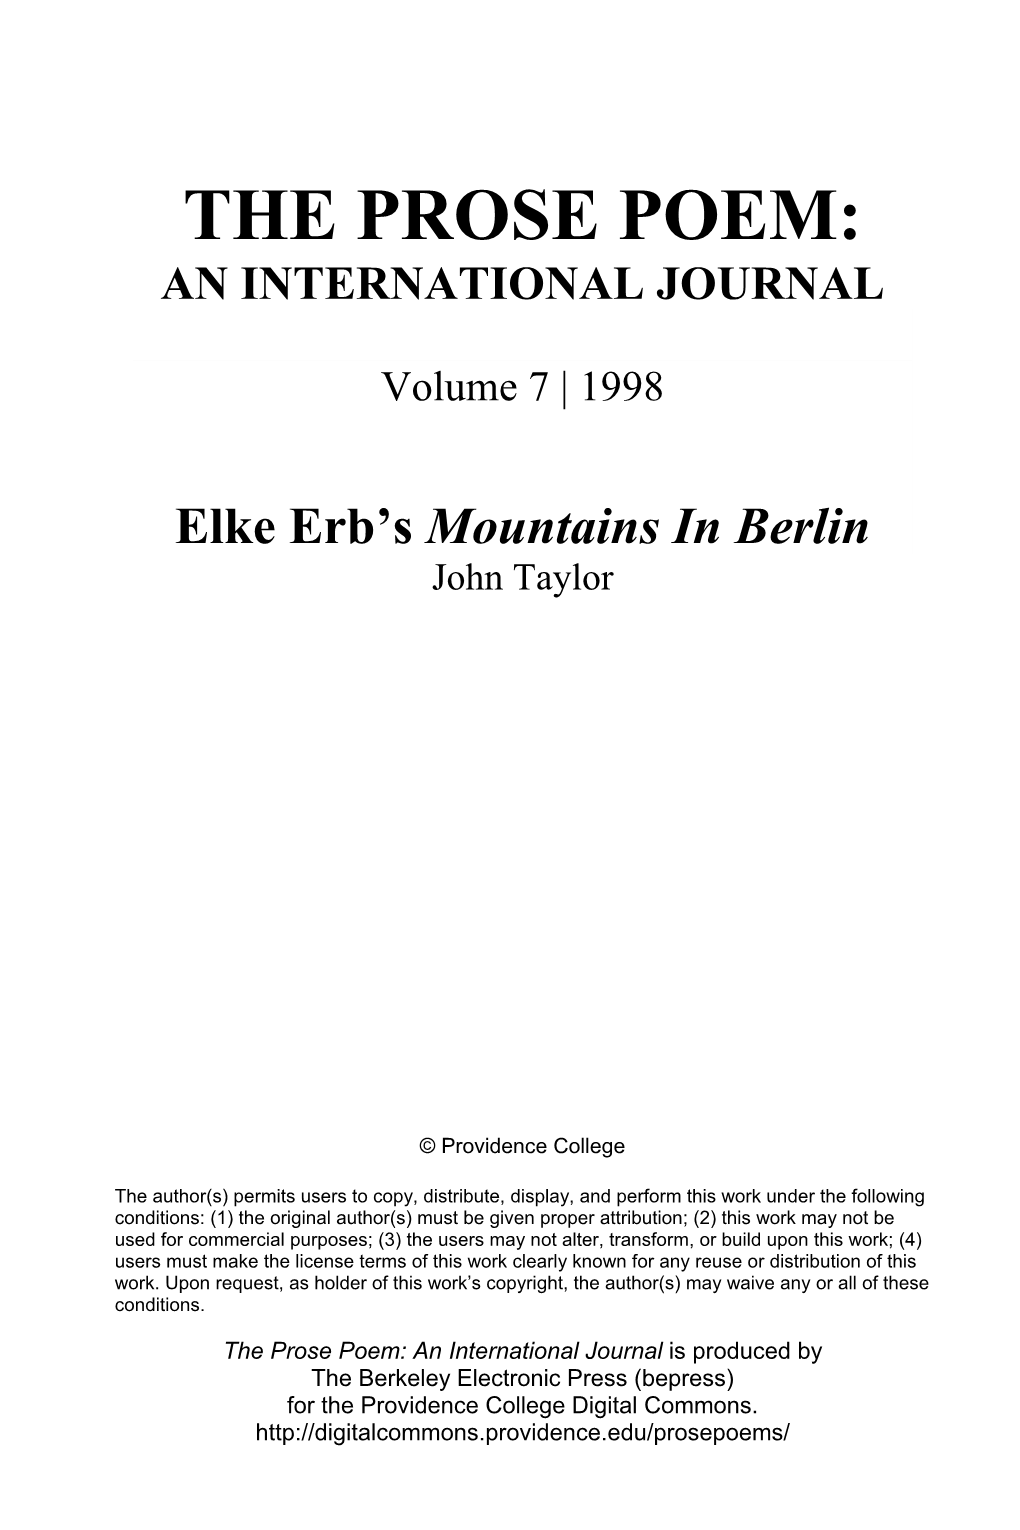 Ekle Erb's Mountains in Berlin